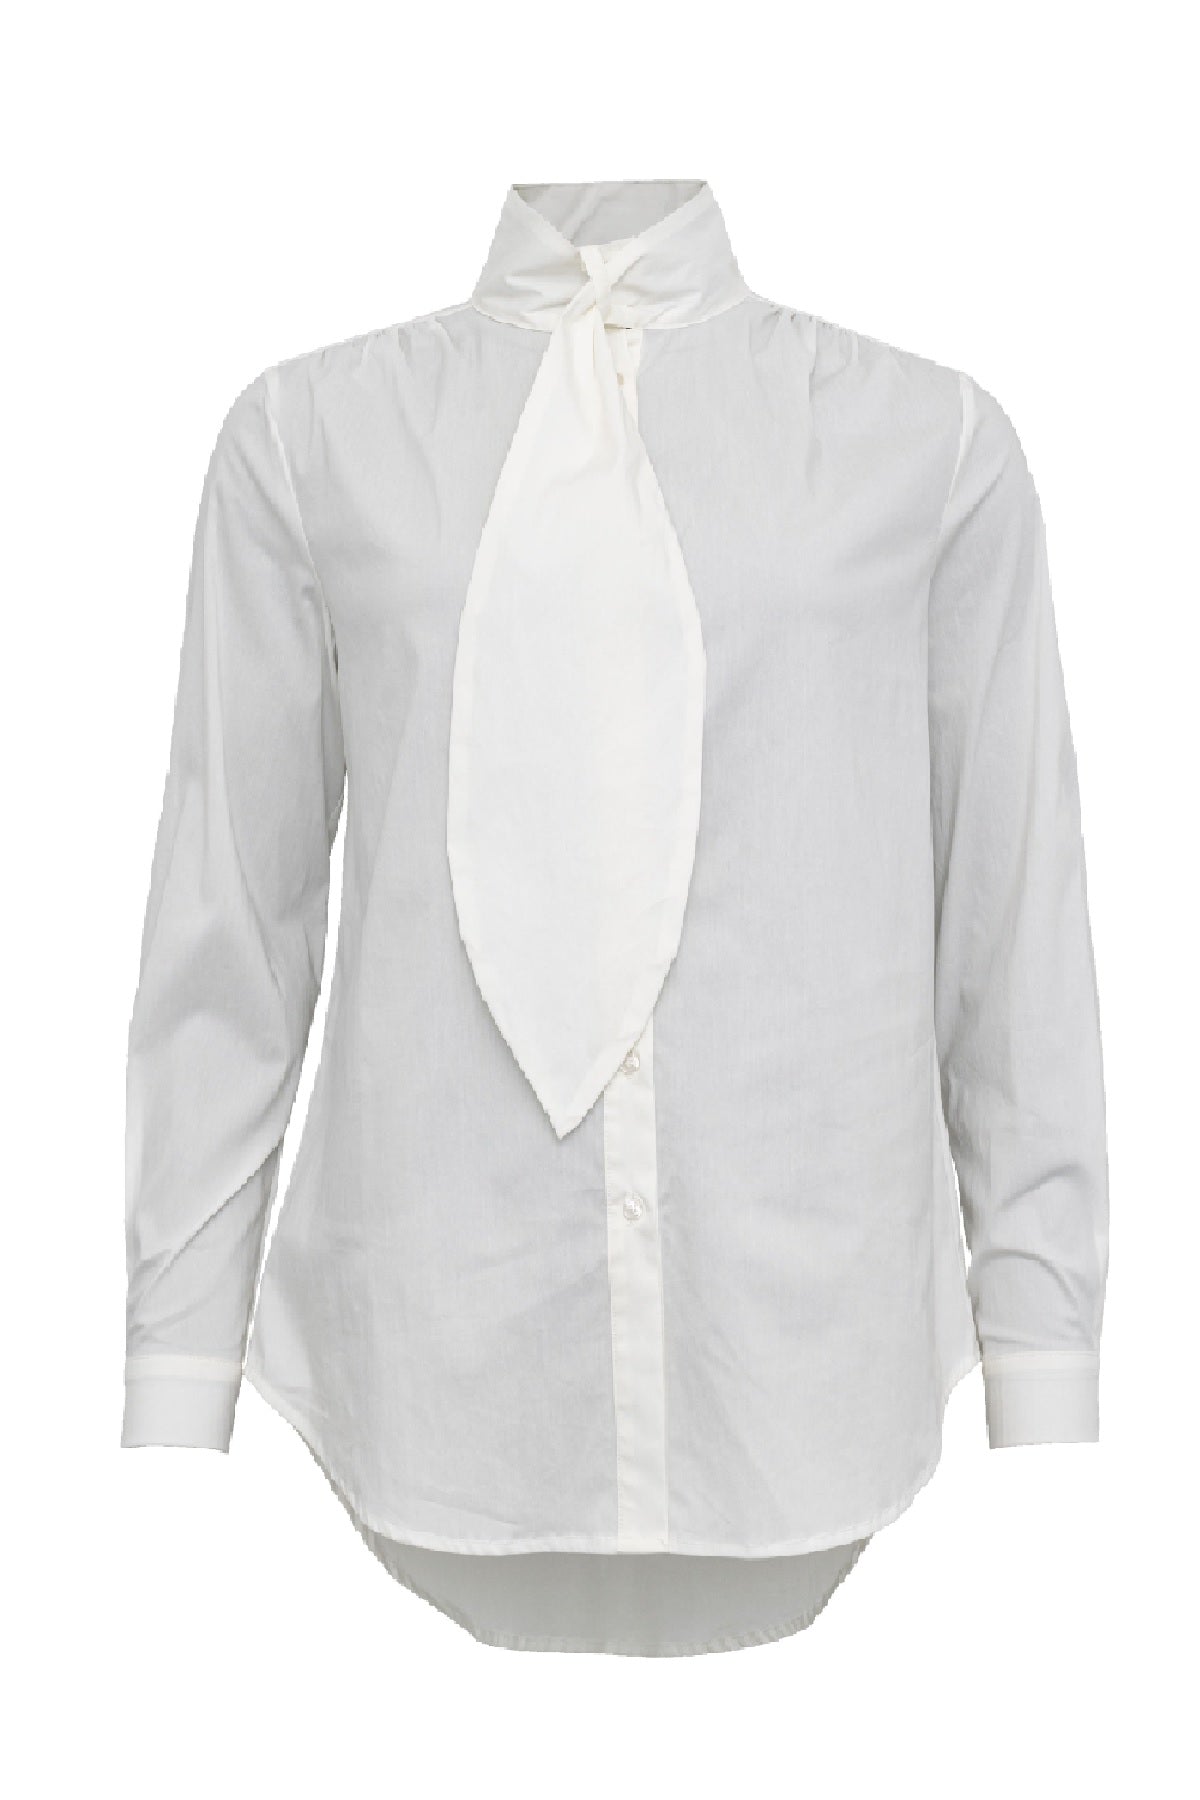 Bøjle 59 - Costamani Tie Shirt, White